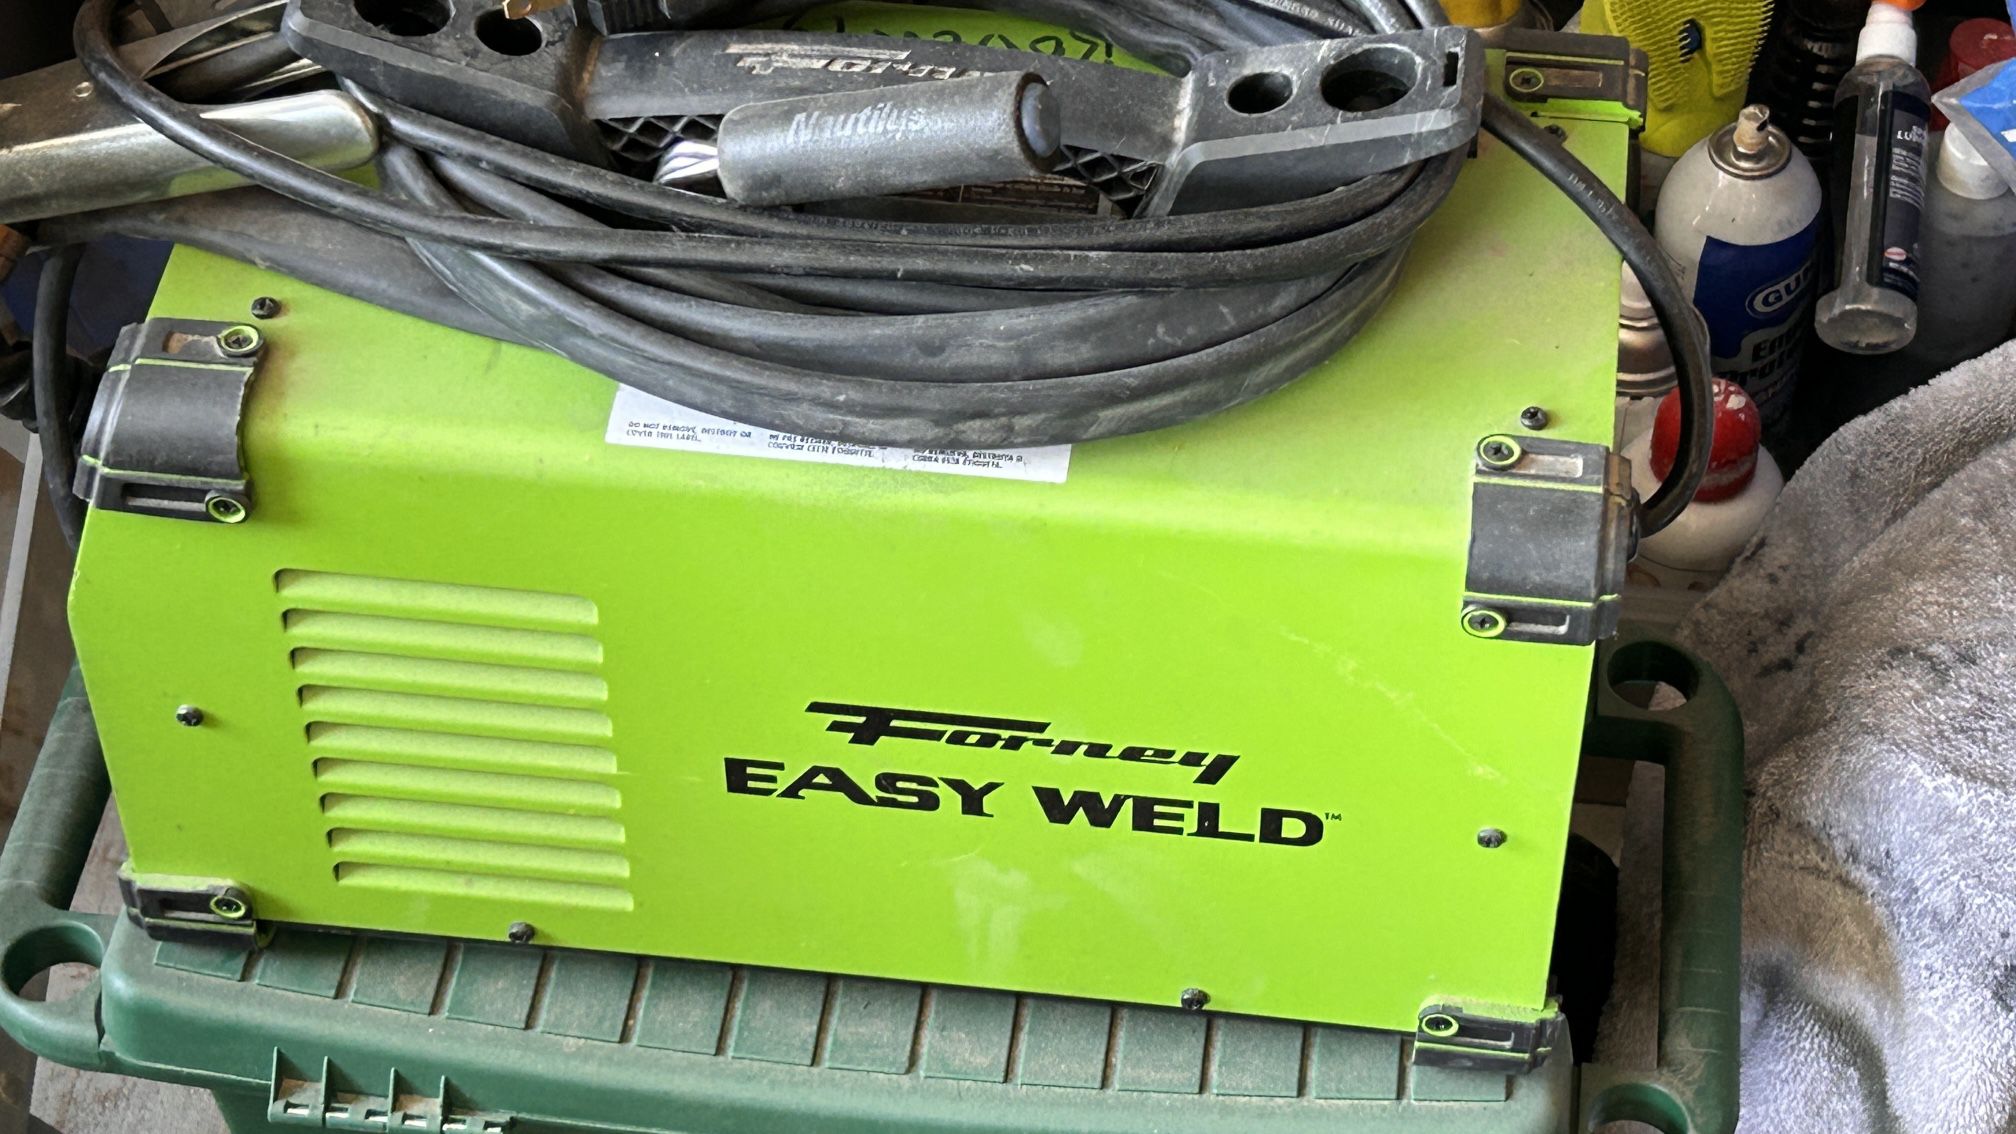 Mig Welder with new XL .035 wire reel